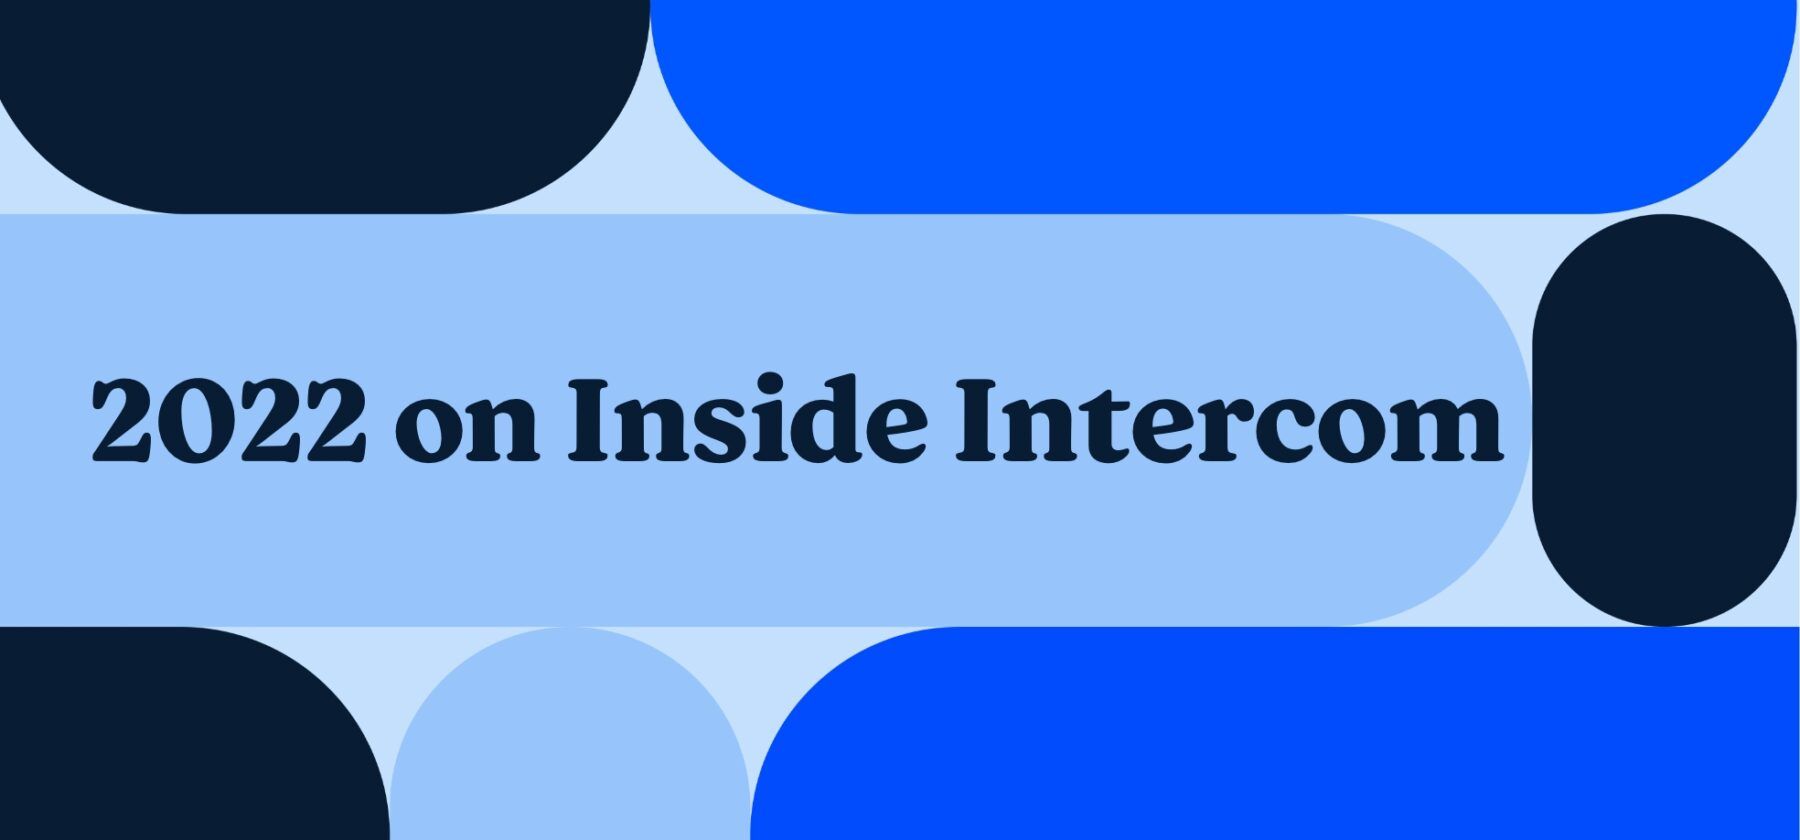 2022 on Inside Intercom